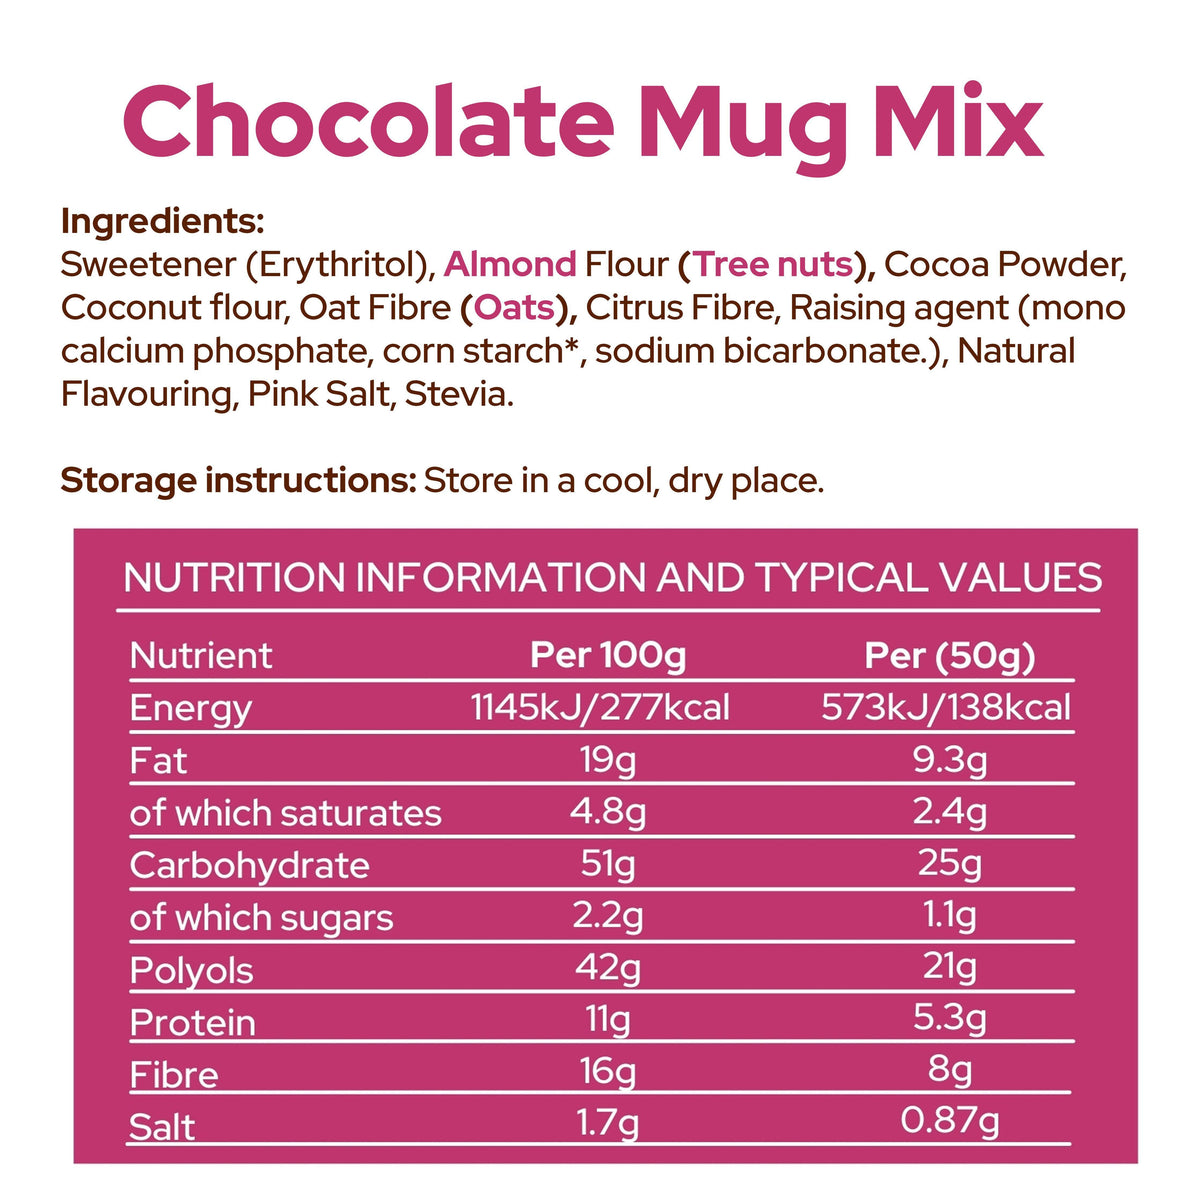 An image of chocolate mug mix nutritional